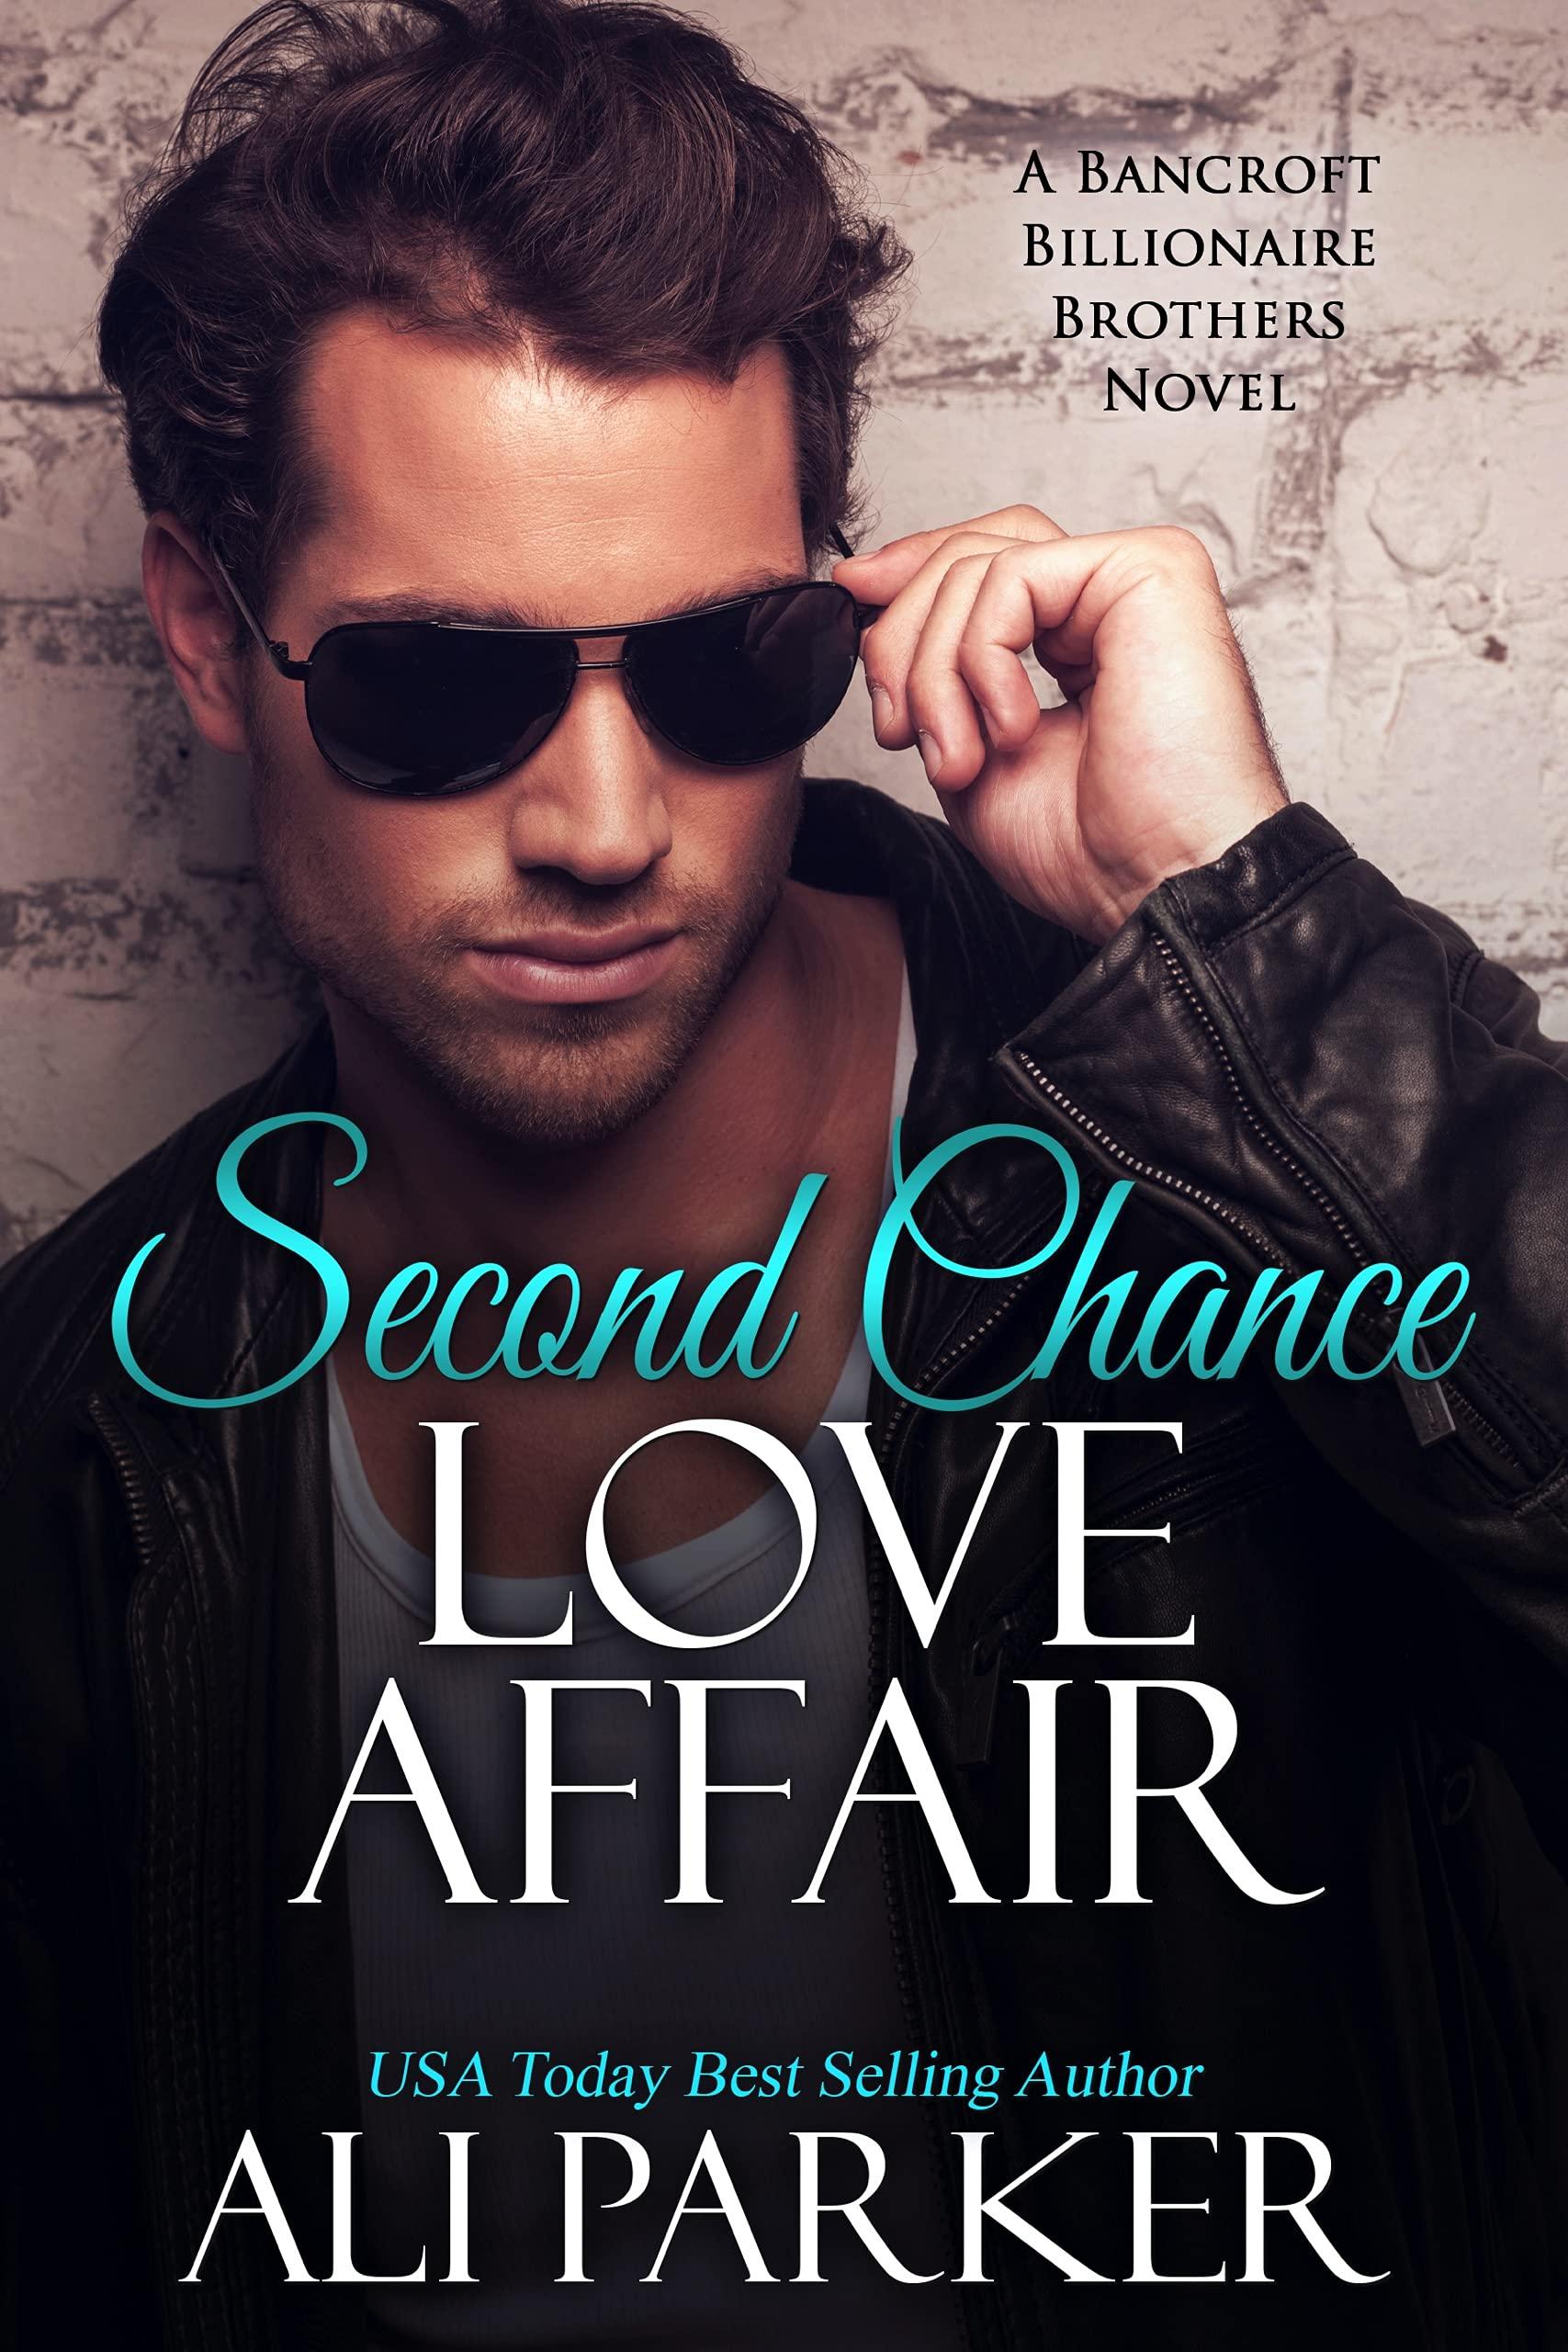 Second Chance Love Affair